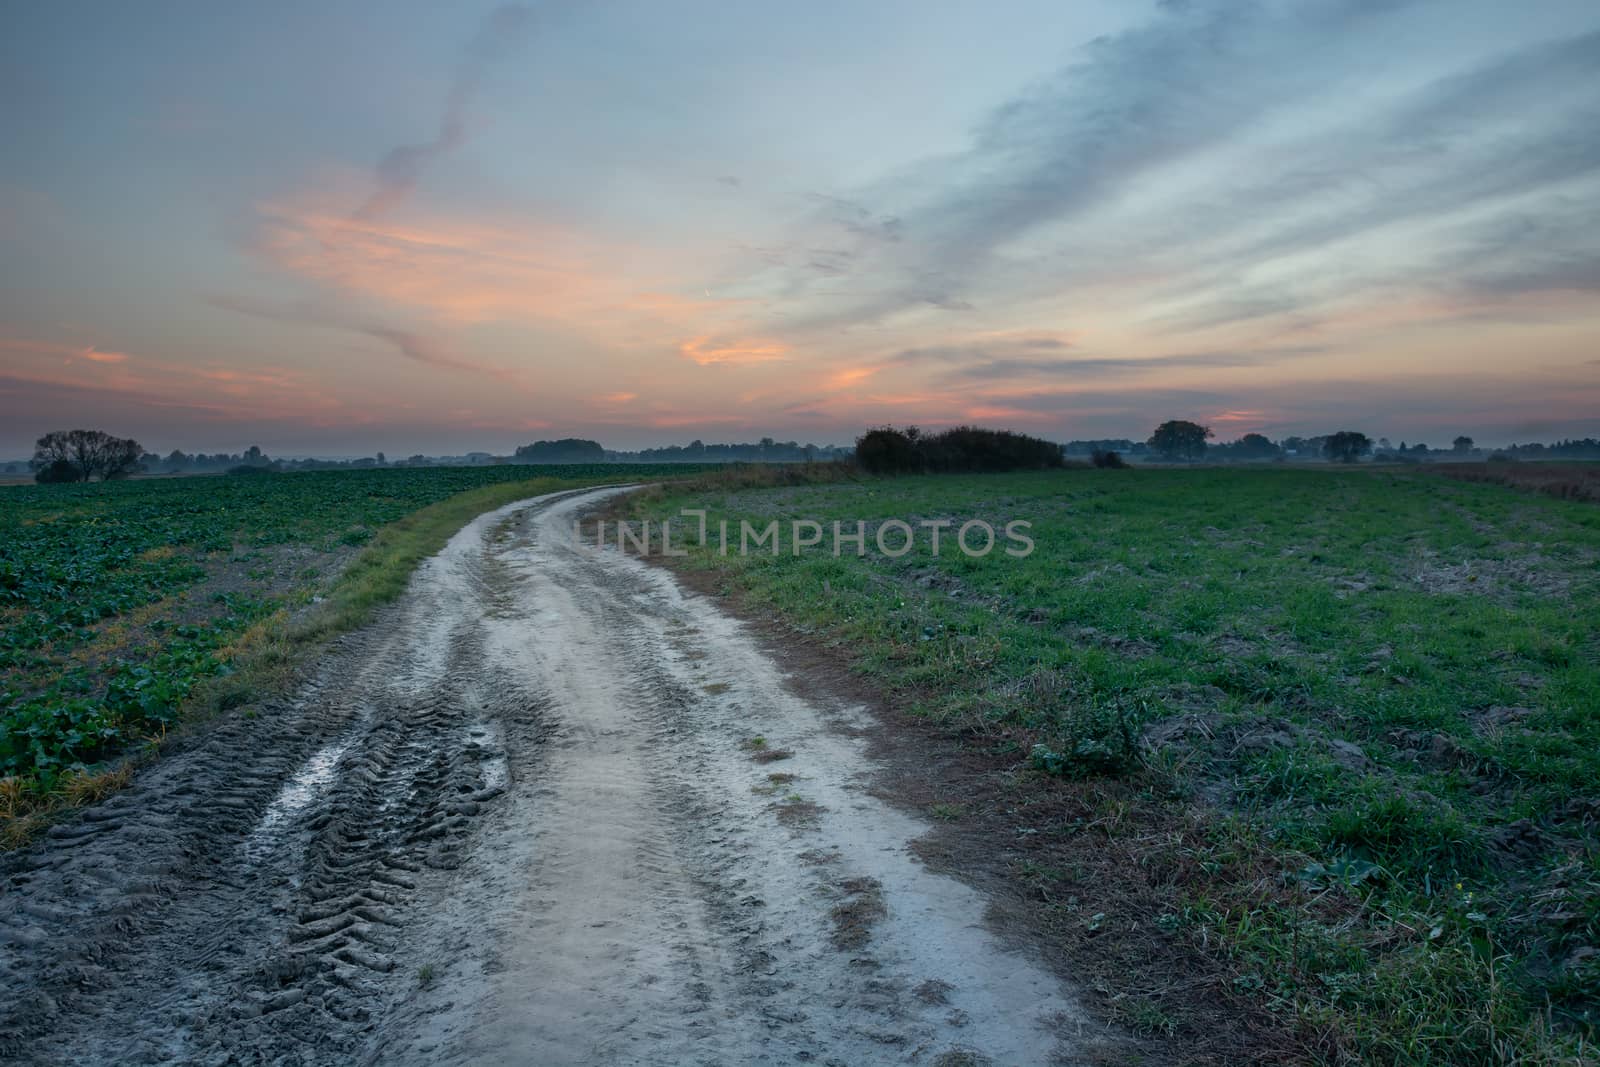 A dirt road through green fields and clouds after sunset, summer evening view